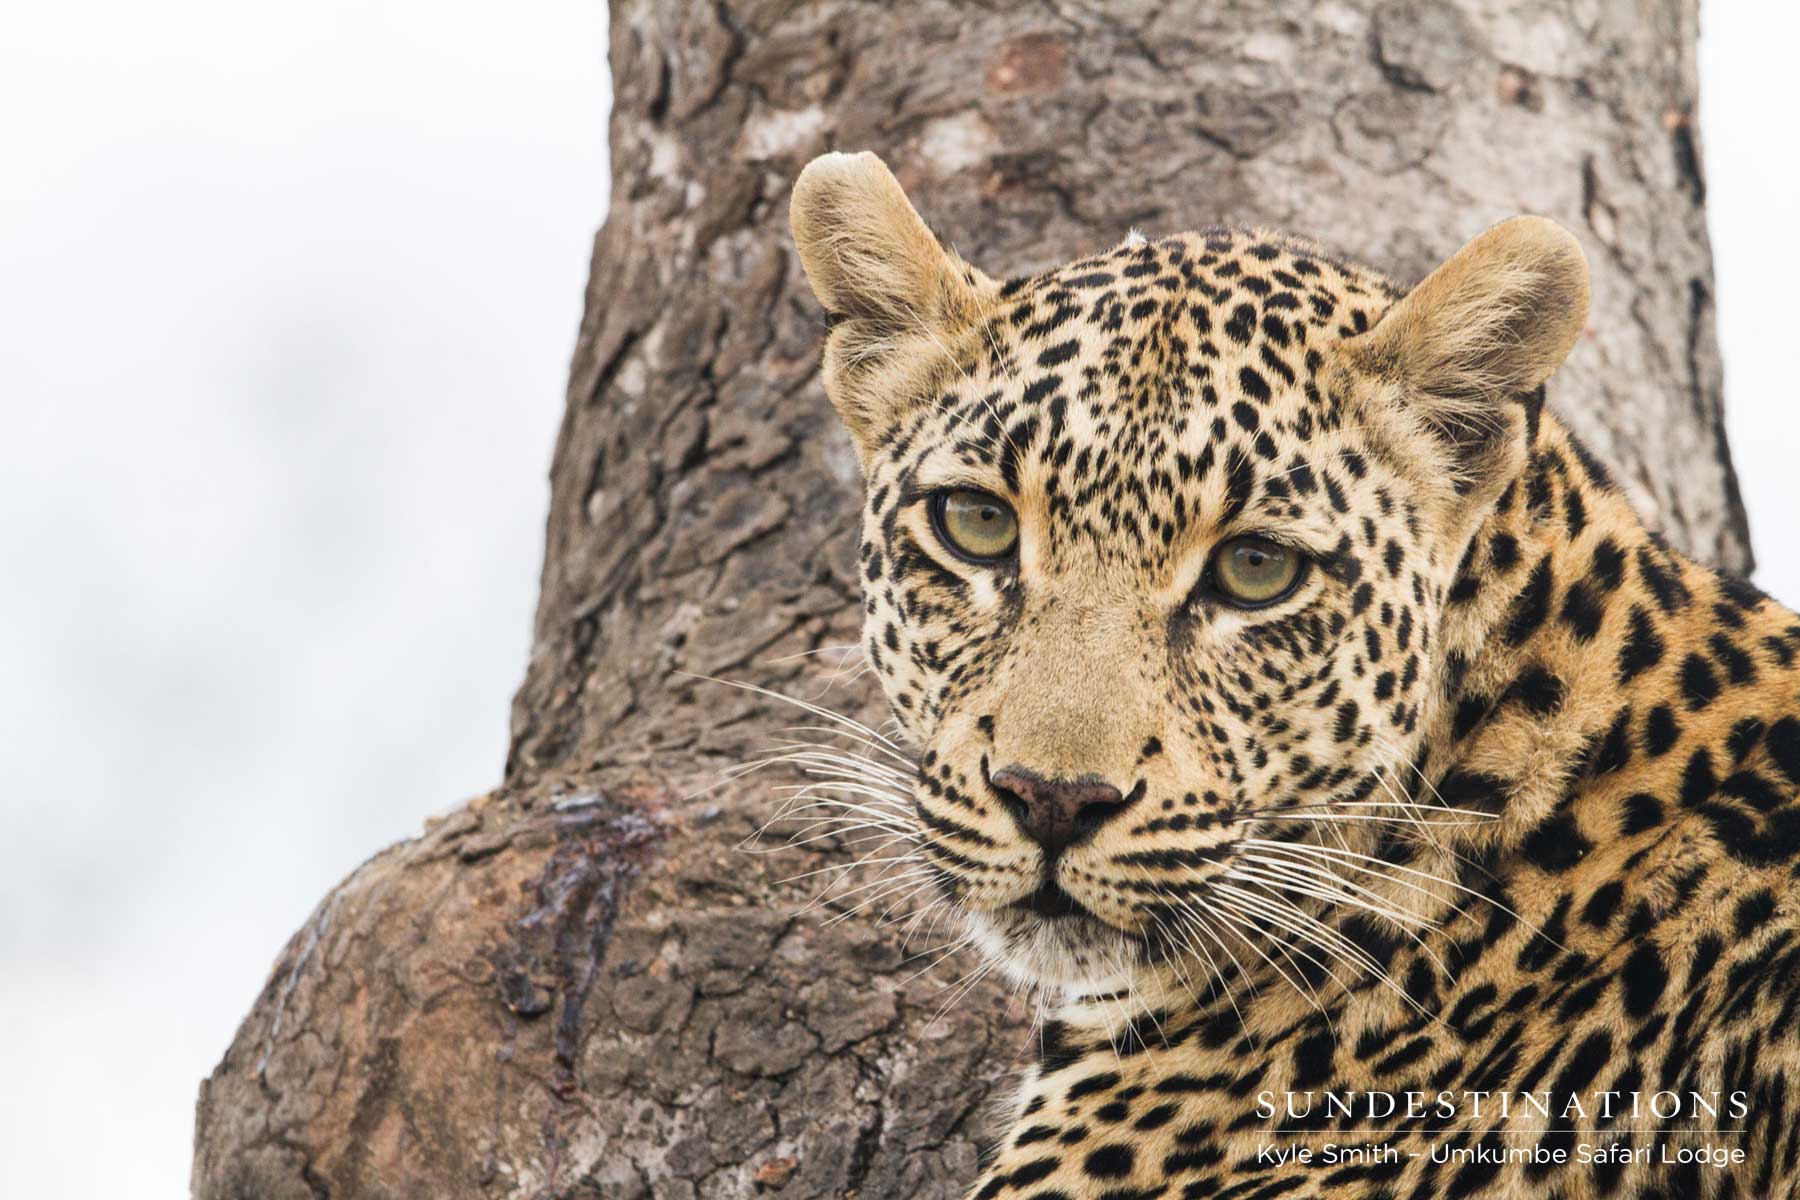 Tatowa the Leopardess